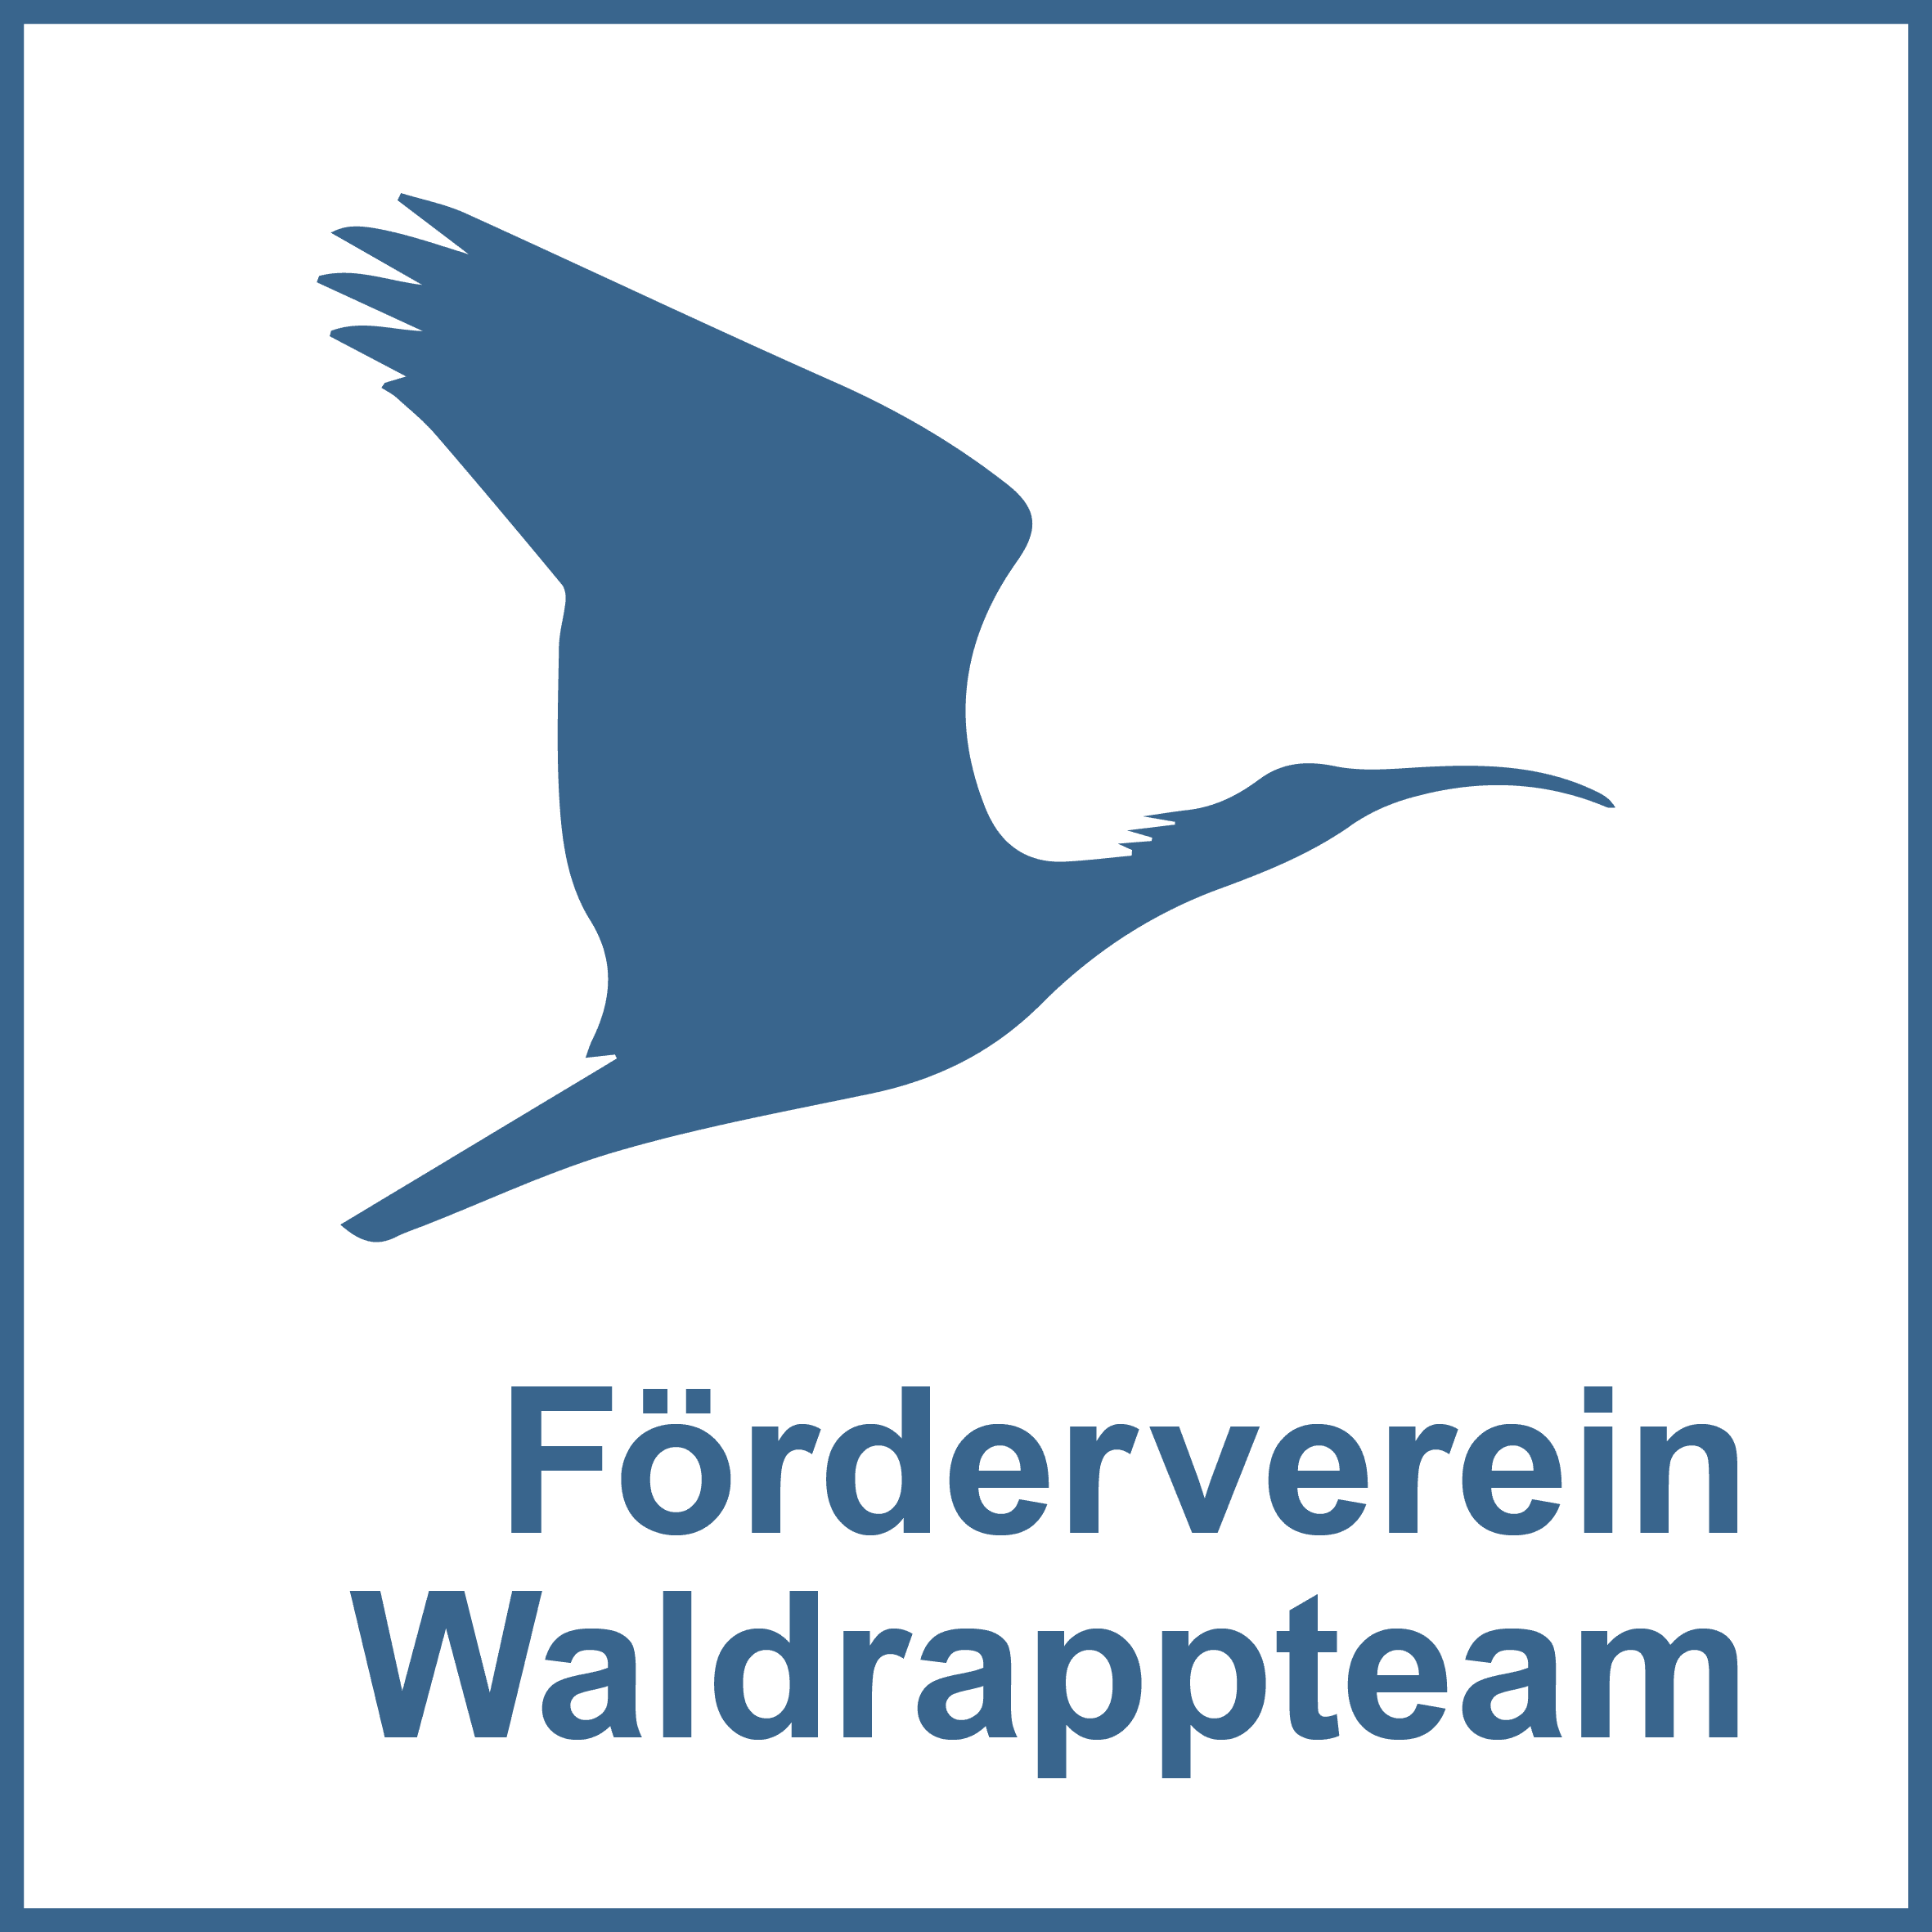 (c) Foerderverein-waldrapp.at